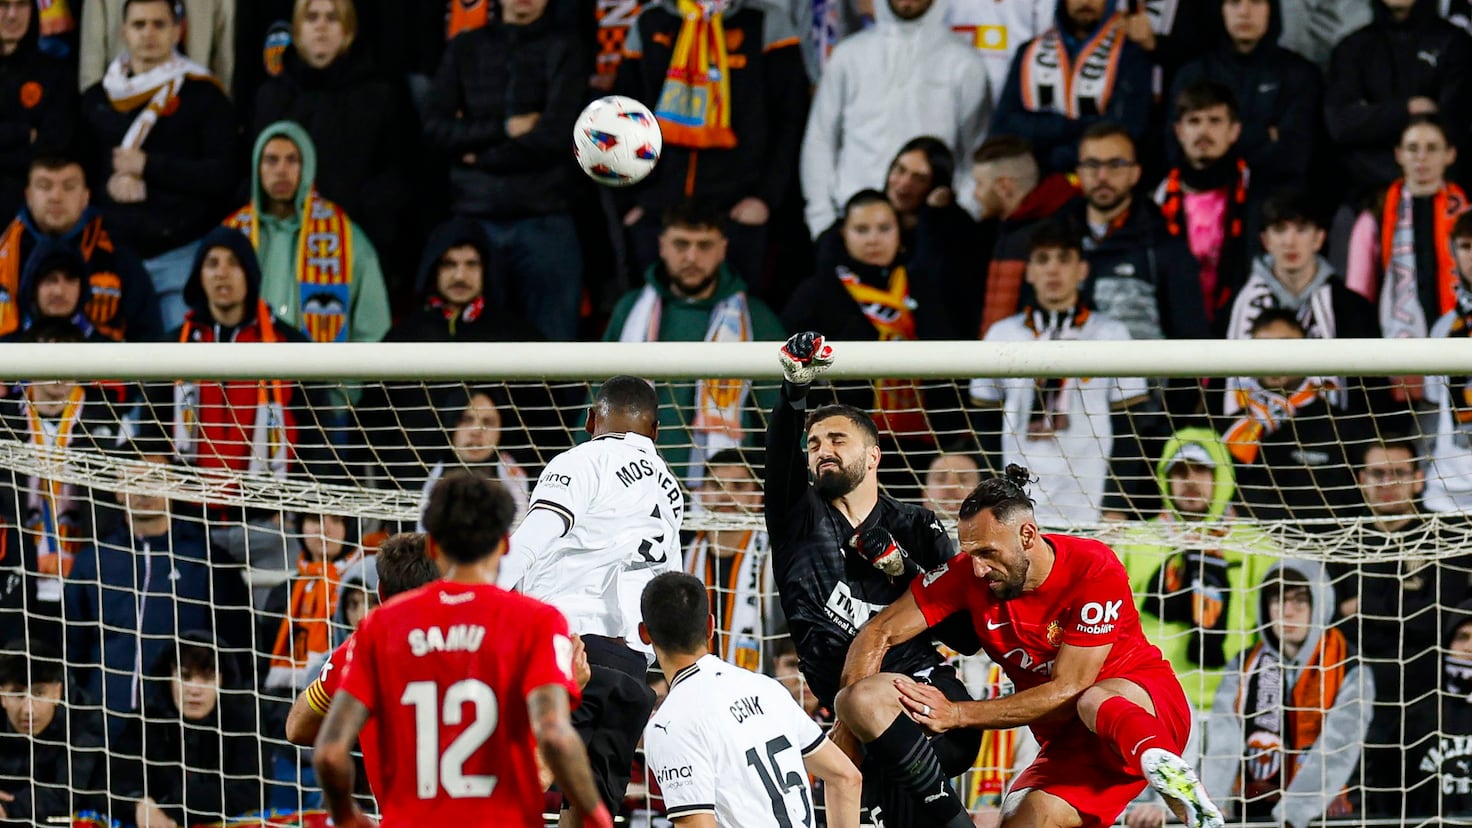 Valencia's Goalie Genius Mamardashvili Stops 6.1 Goals!